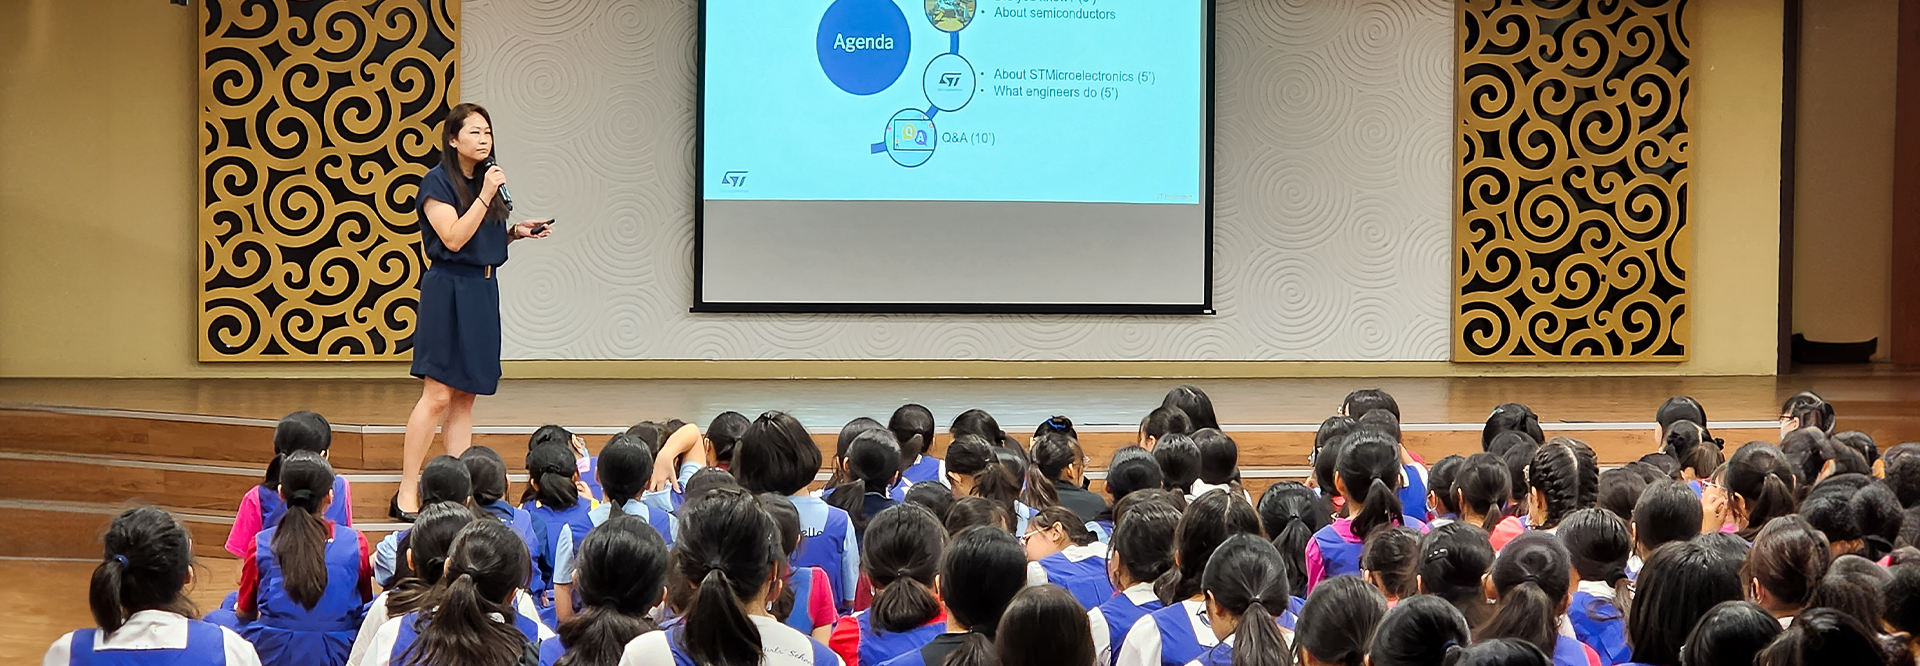 Presentation being held in front of children (photo)